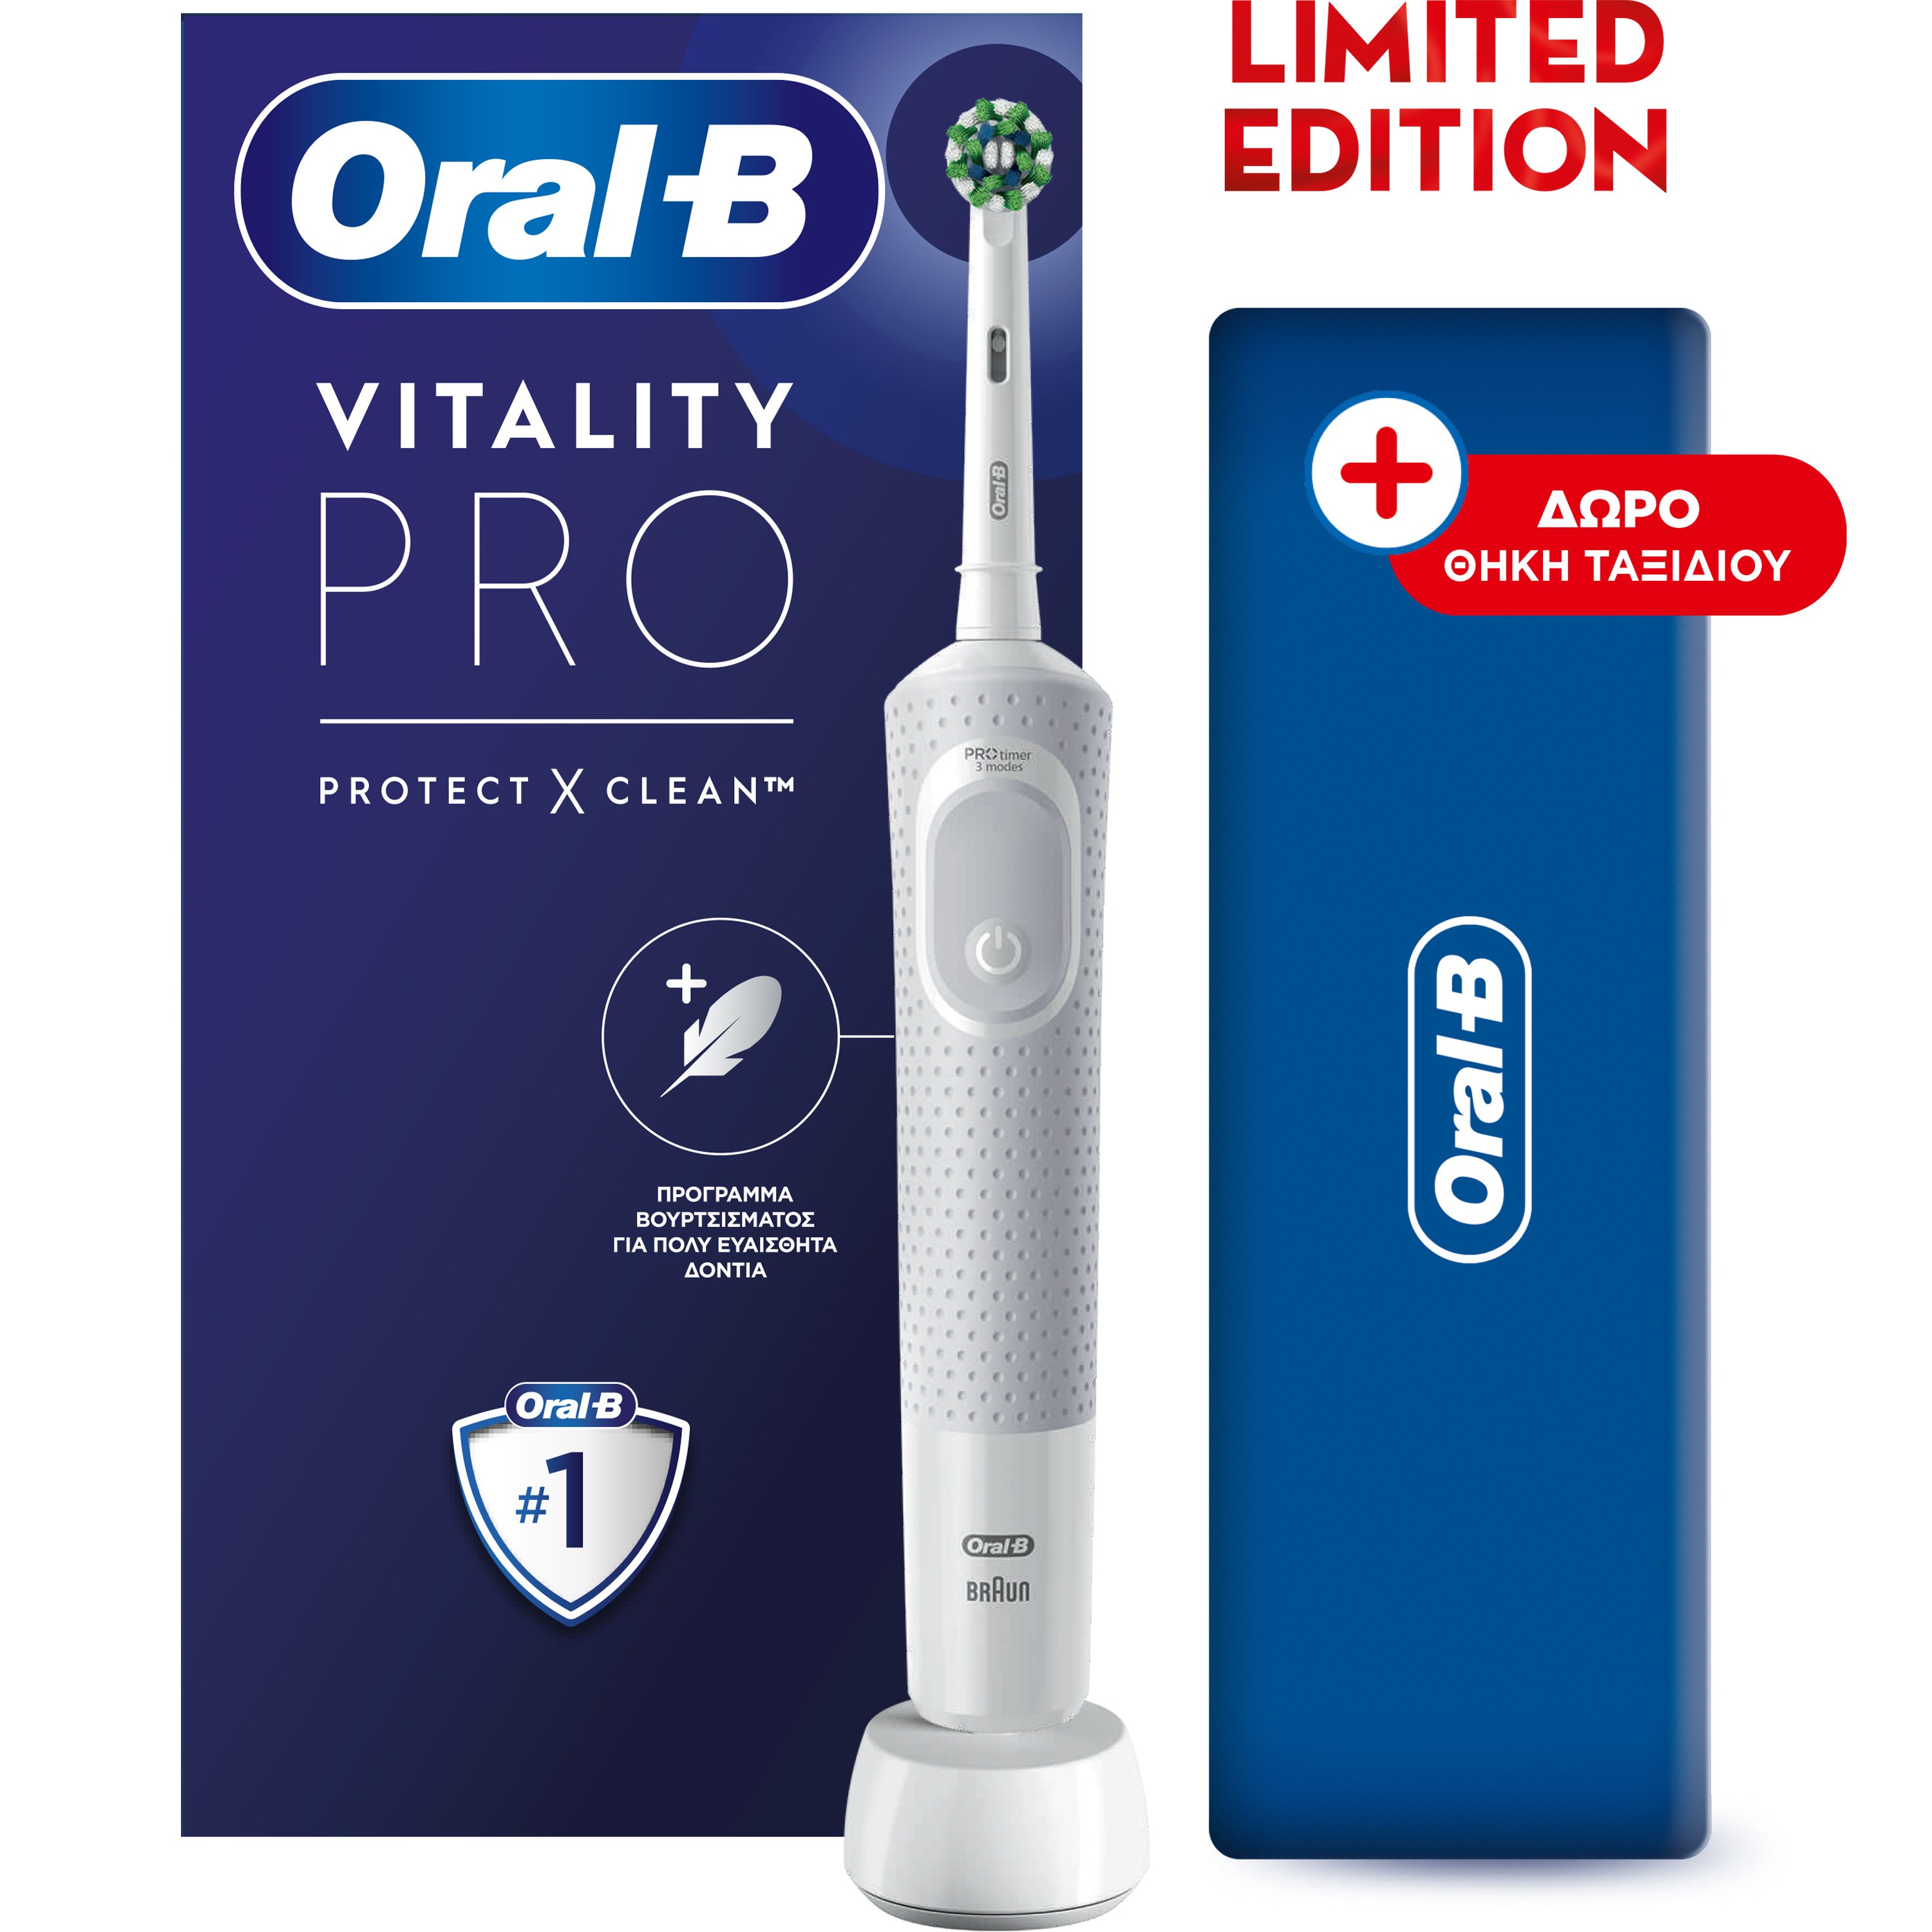 Oral-B Promo Vitality Pro Protect X Clean Επαναφορτιζόμενη Ηλεκτρική Οδοντόβουρτσα με 3 Προγράμματα Λευκό 1 Τεμάχιο & Δώρο Θήκη Ταξιδίου Limited Edition